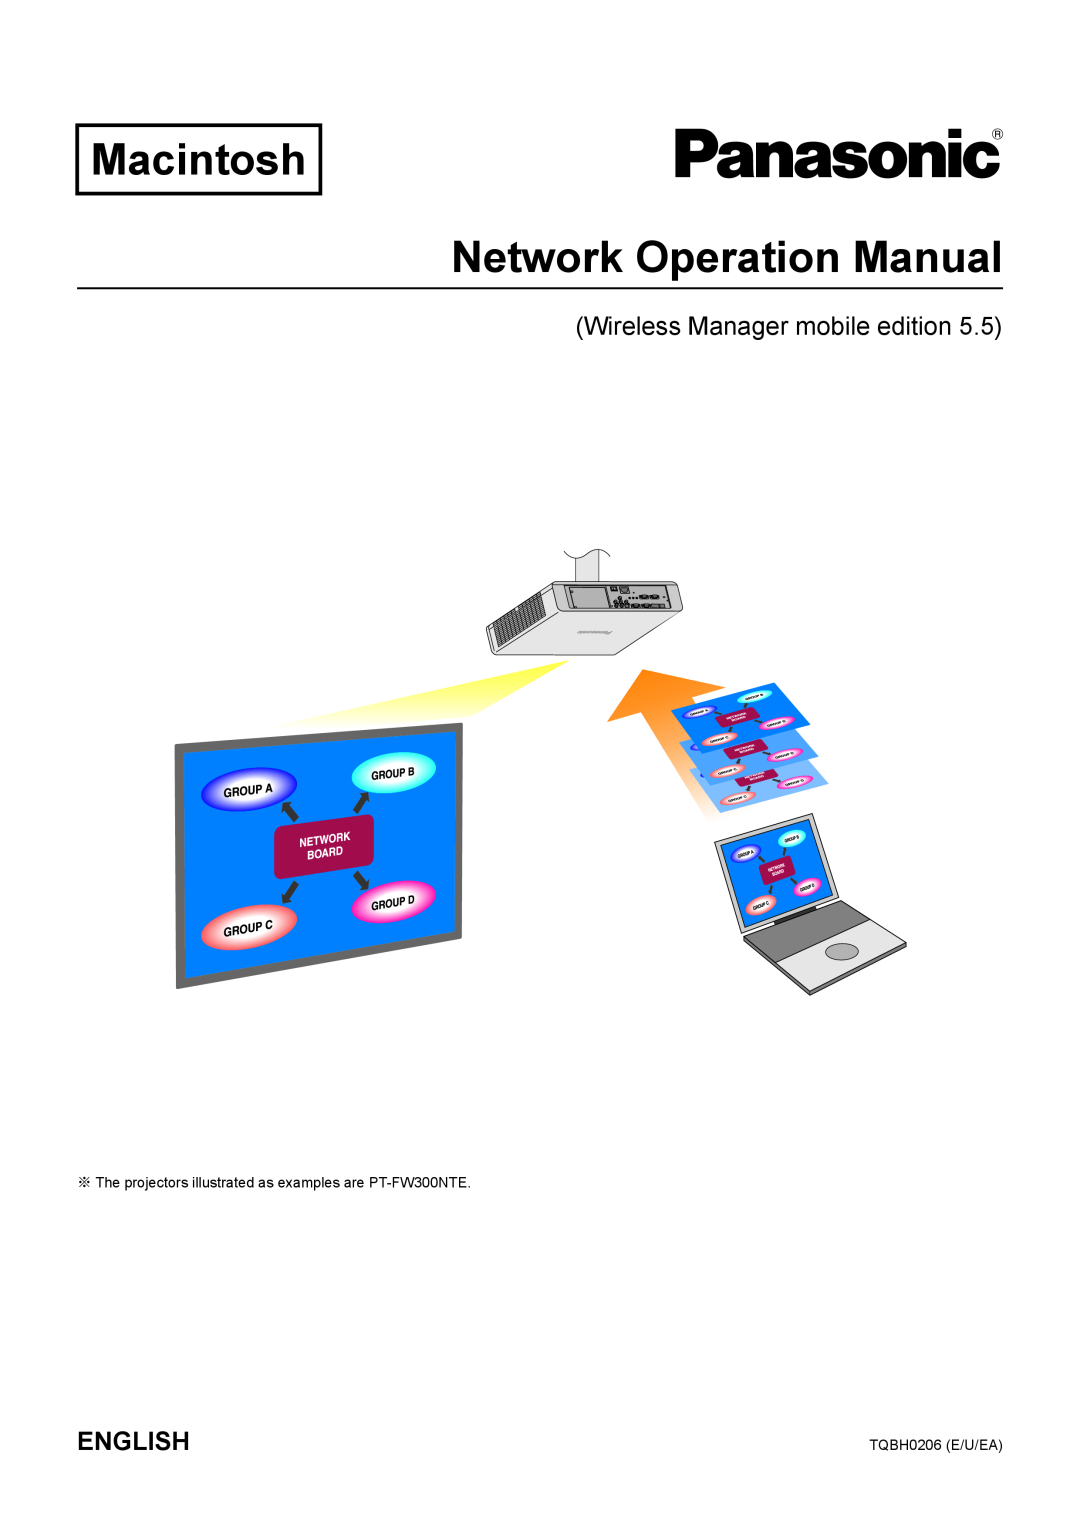 Panasonic TH-LB55NT operation manual English, Macintosh, Network Operation Manual, Wireless Manager mobile edition 